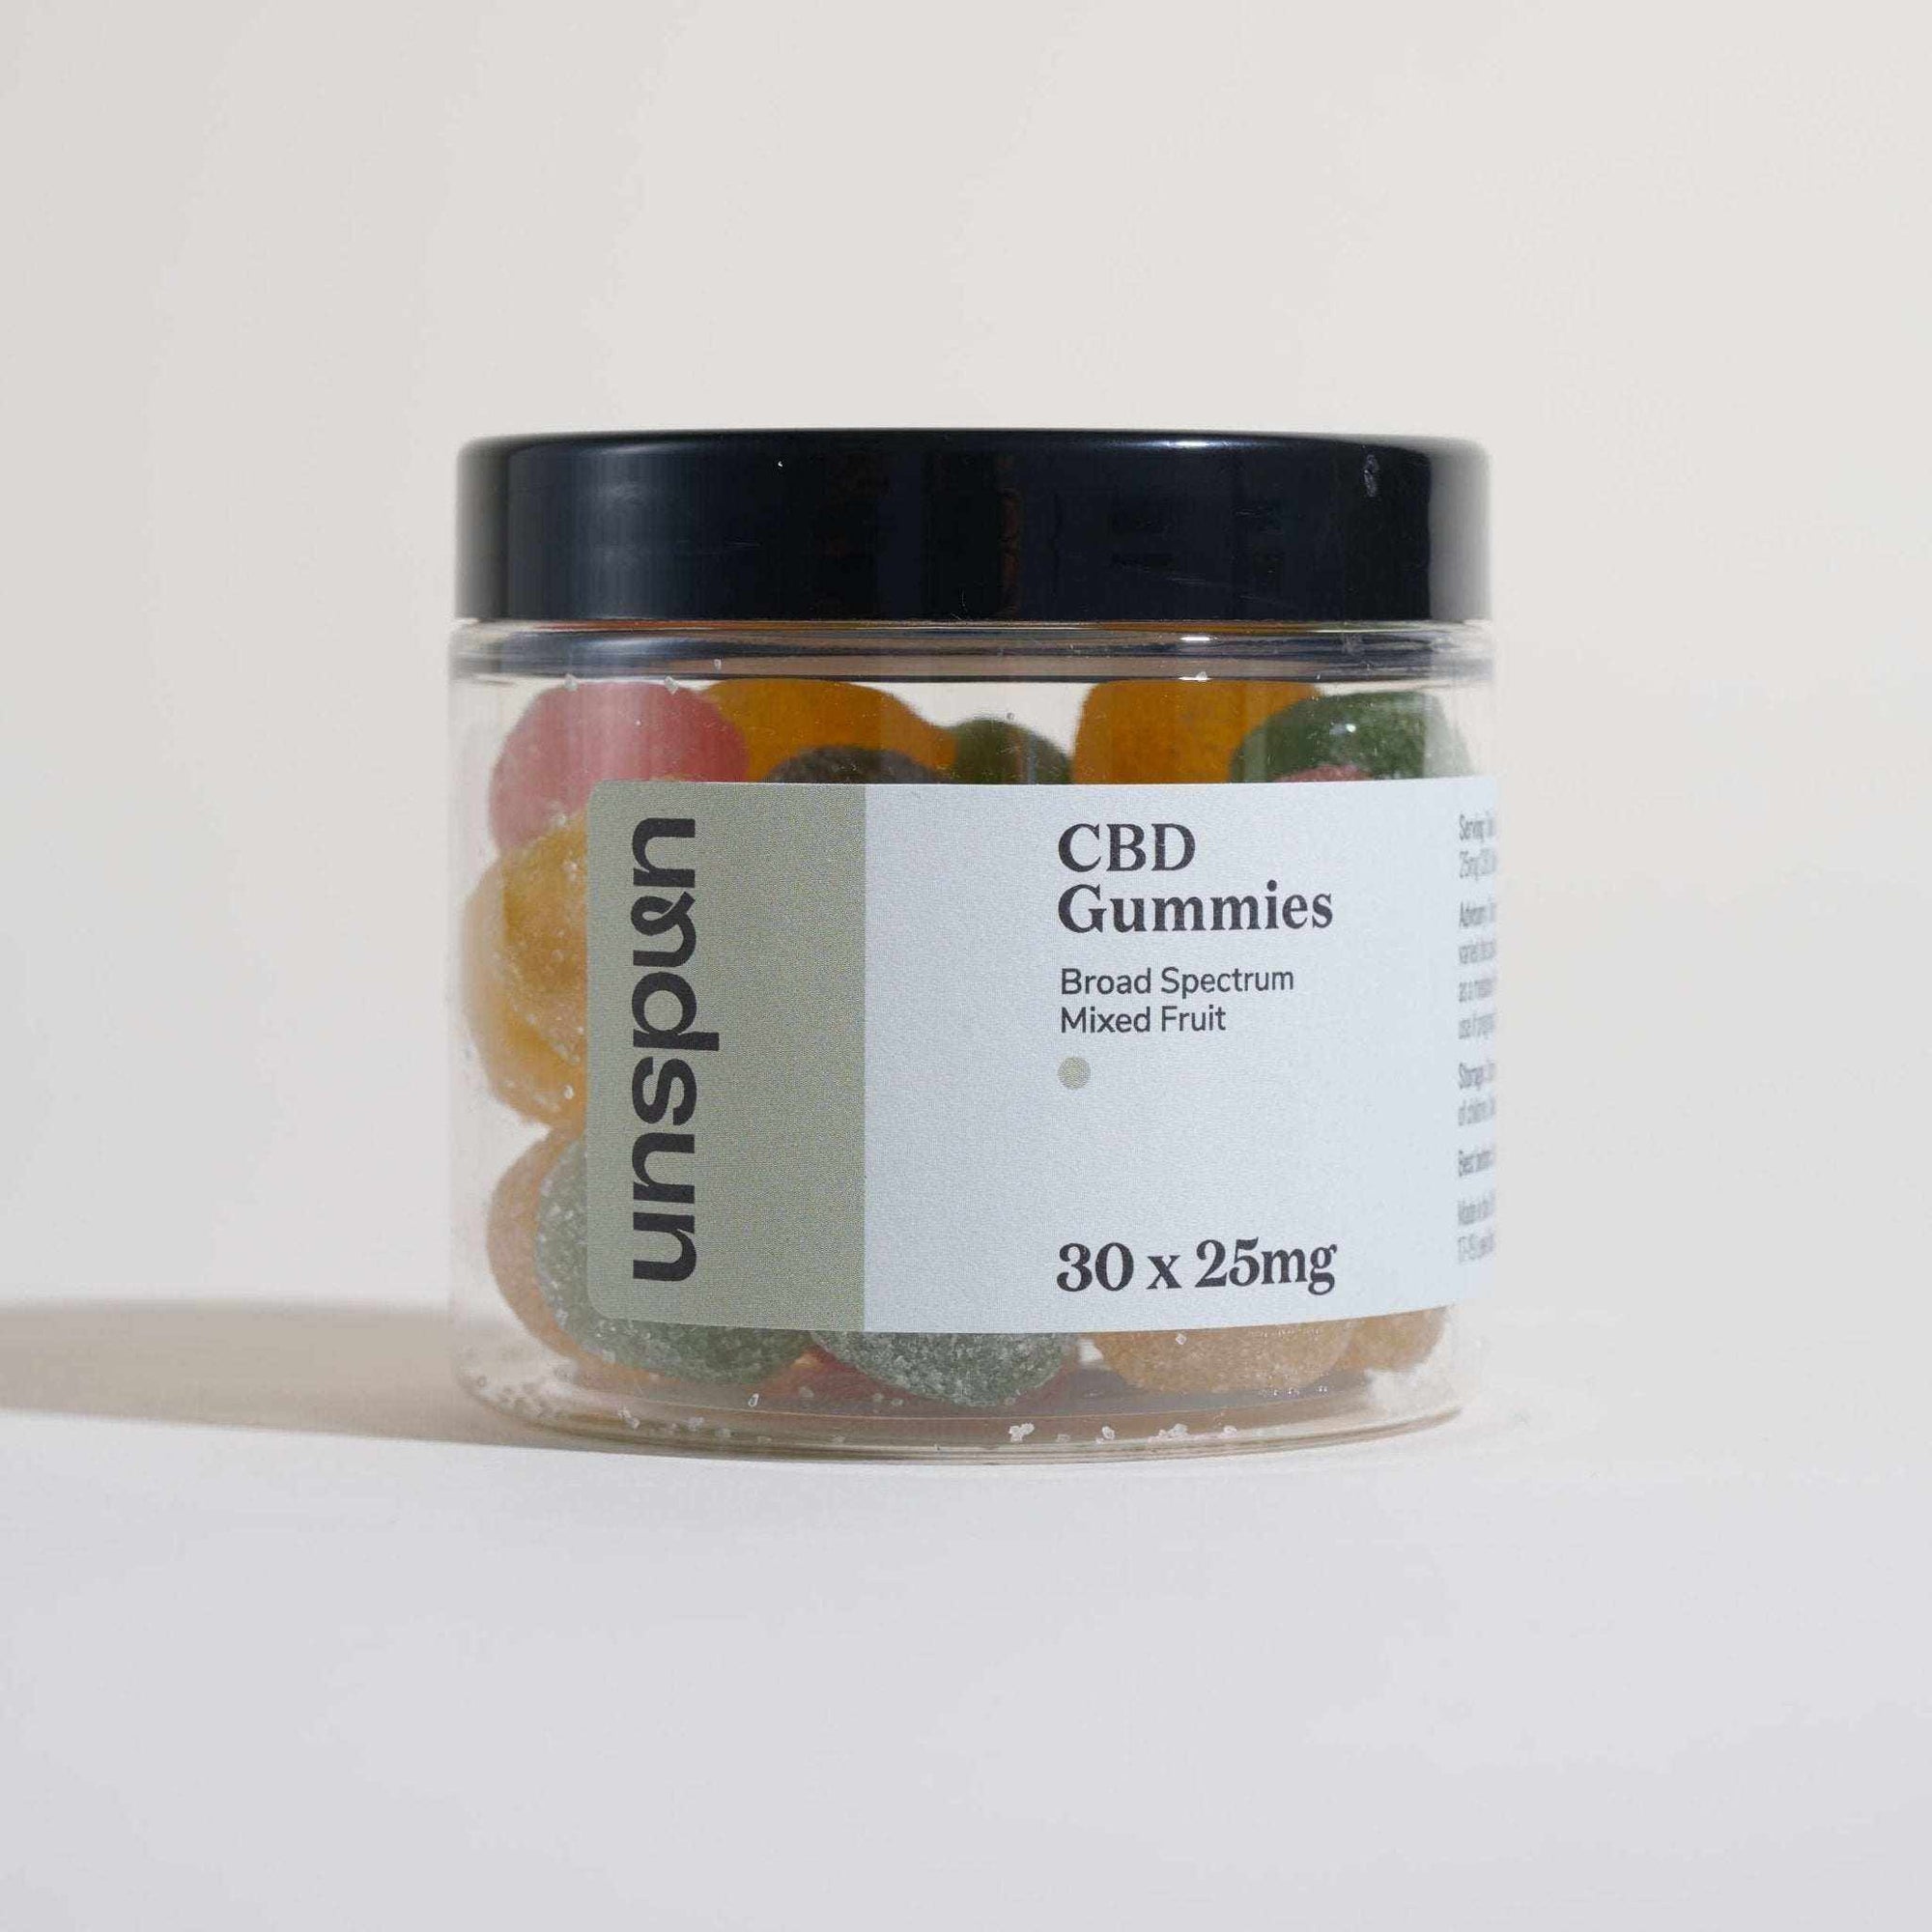 Unspun Broad Spectrum CBD Gummies centred in packaging 